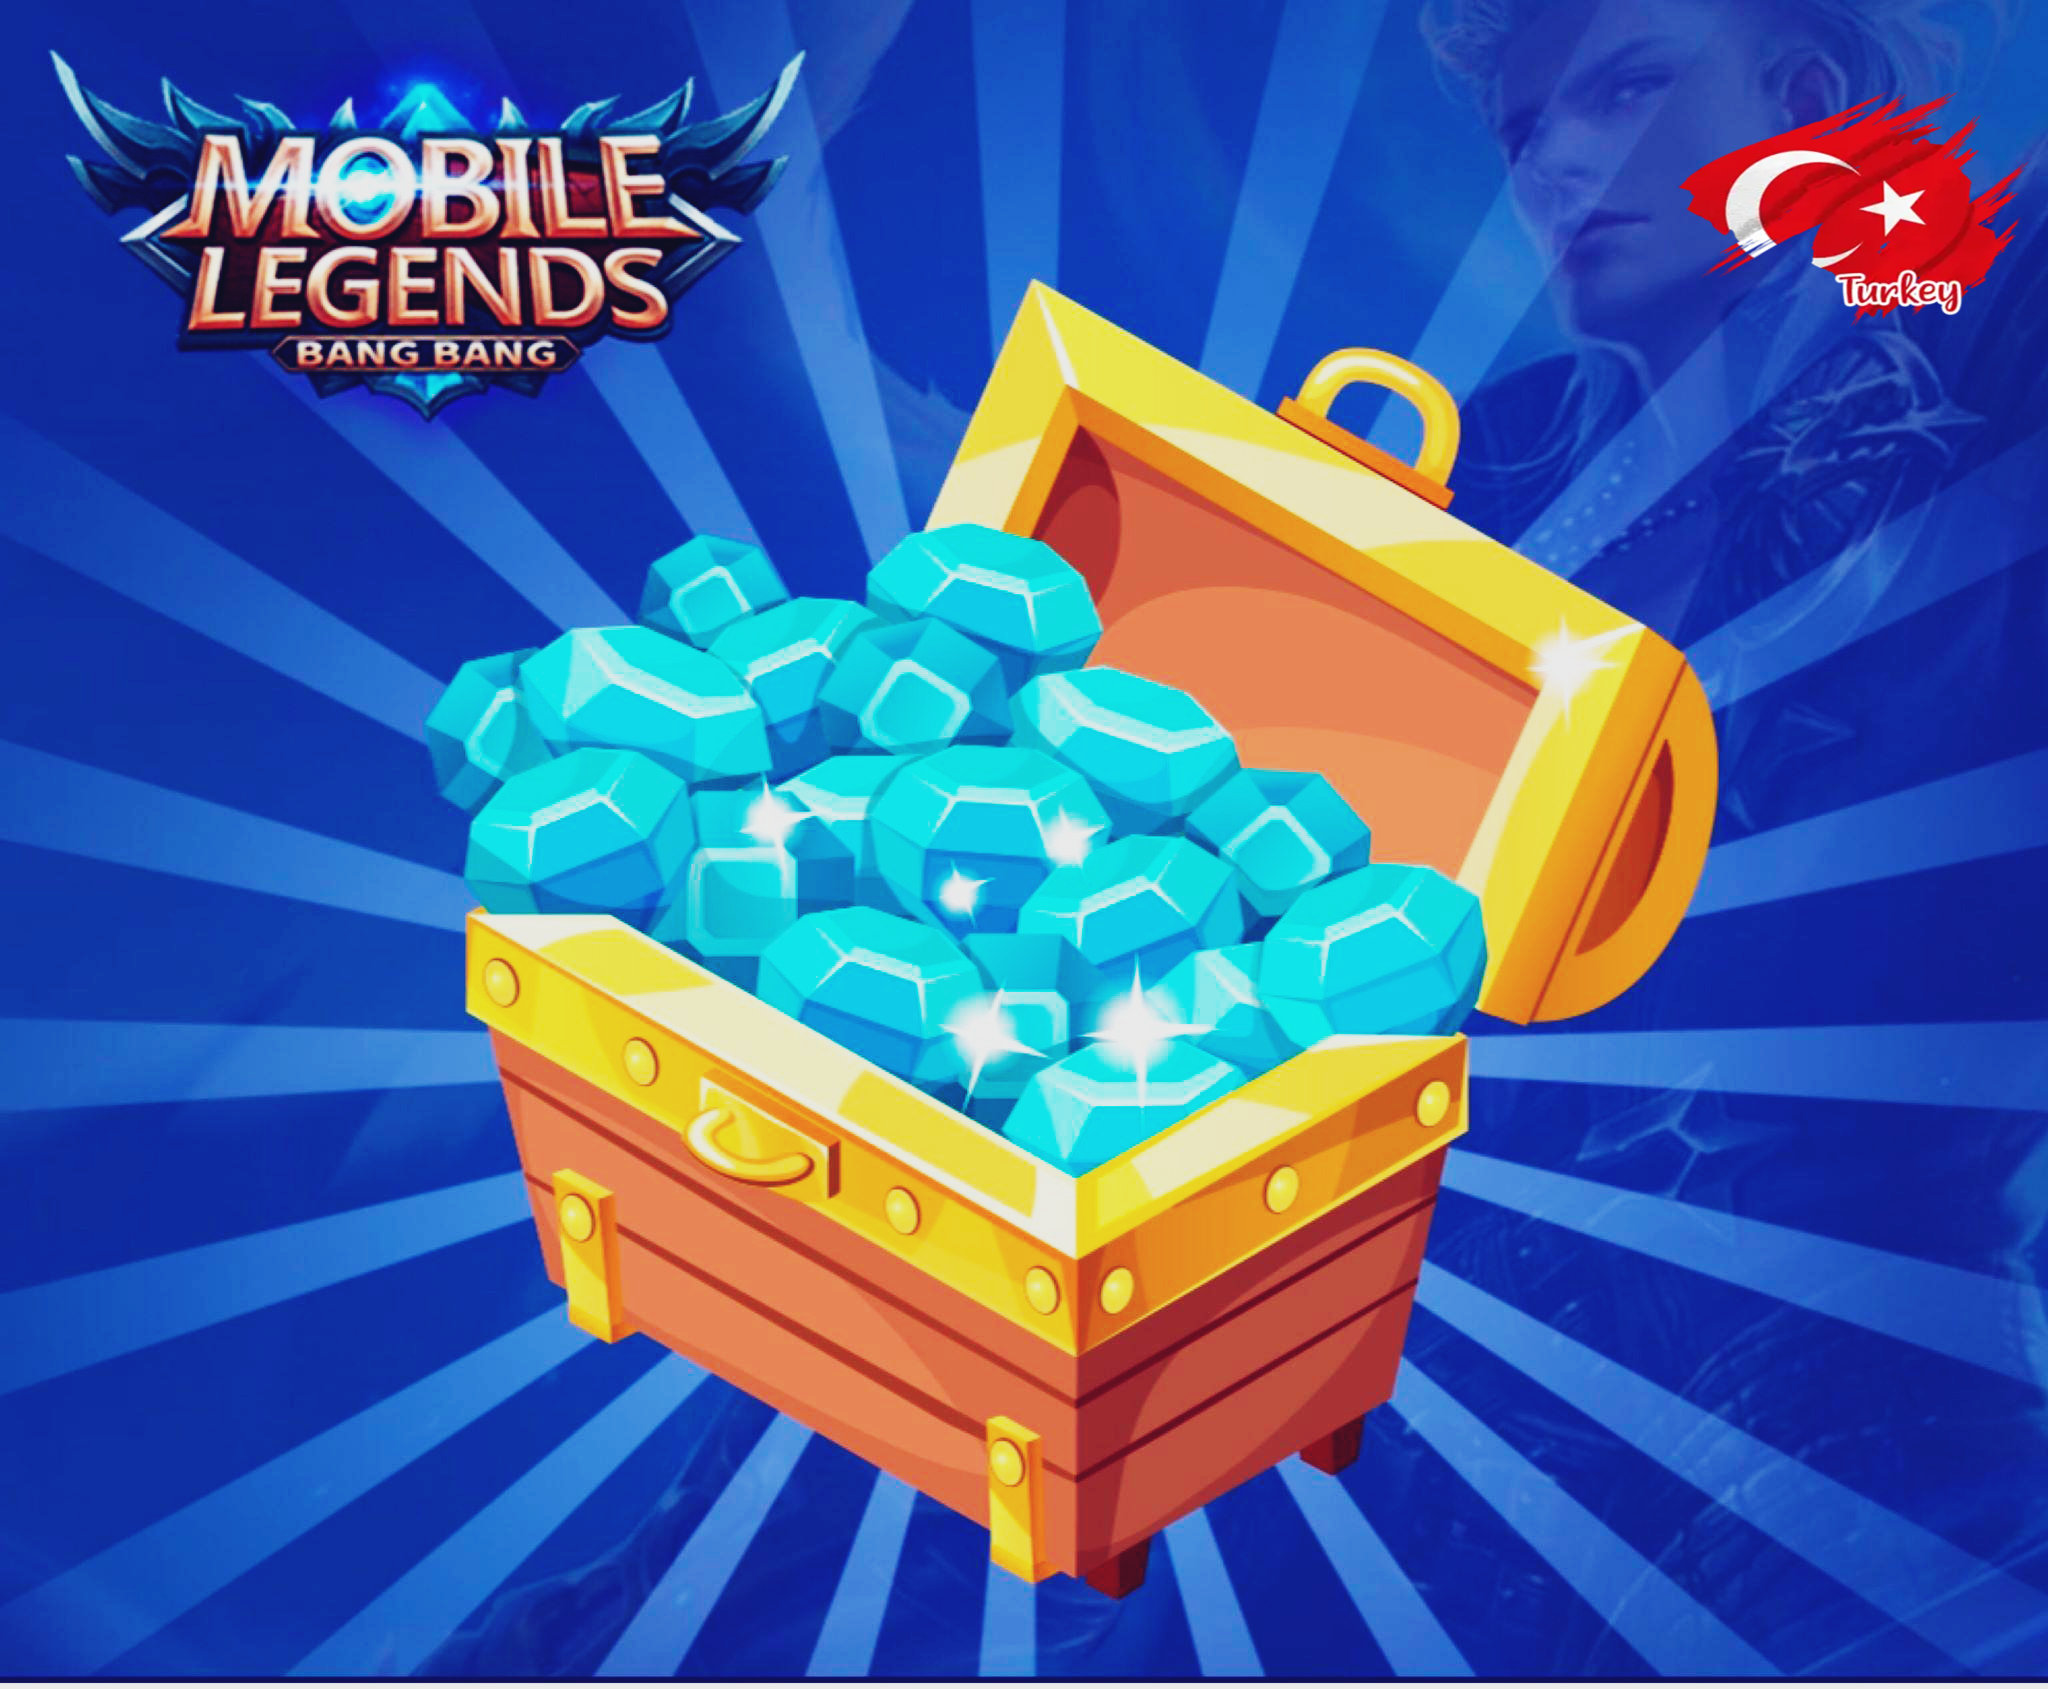 80 Diamonds + 8 Bonus Mobile Legends TOP UP